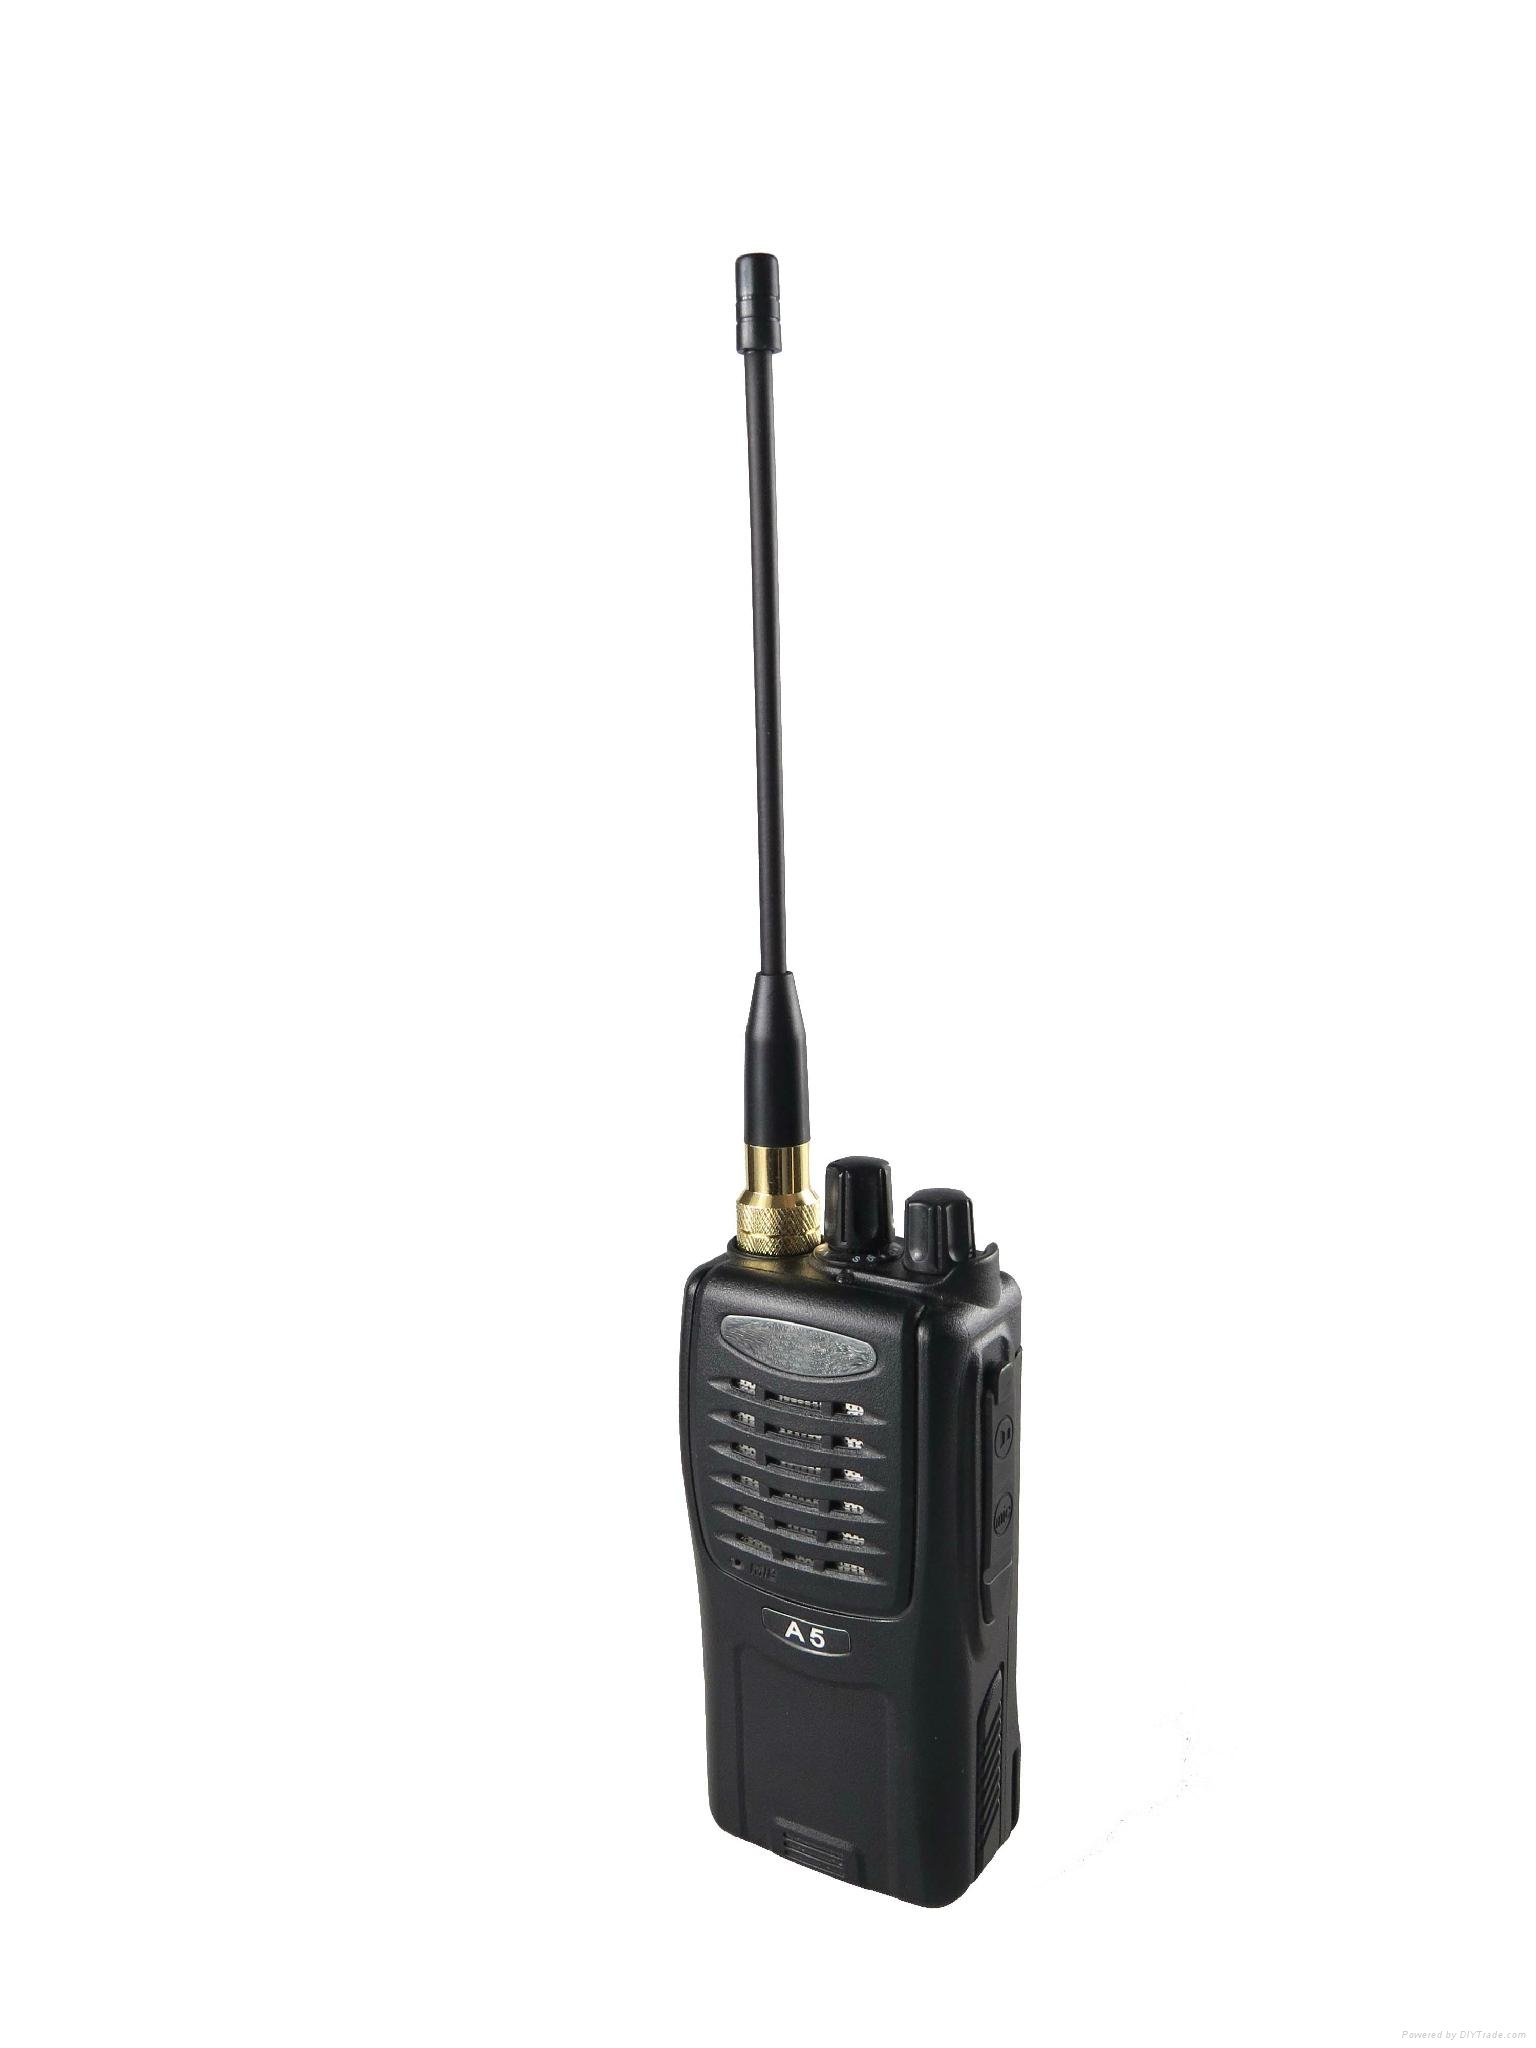 A5 UHF 450-470MHz Wireless Handheld Two-way Radio 4